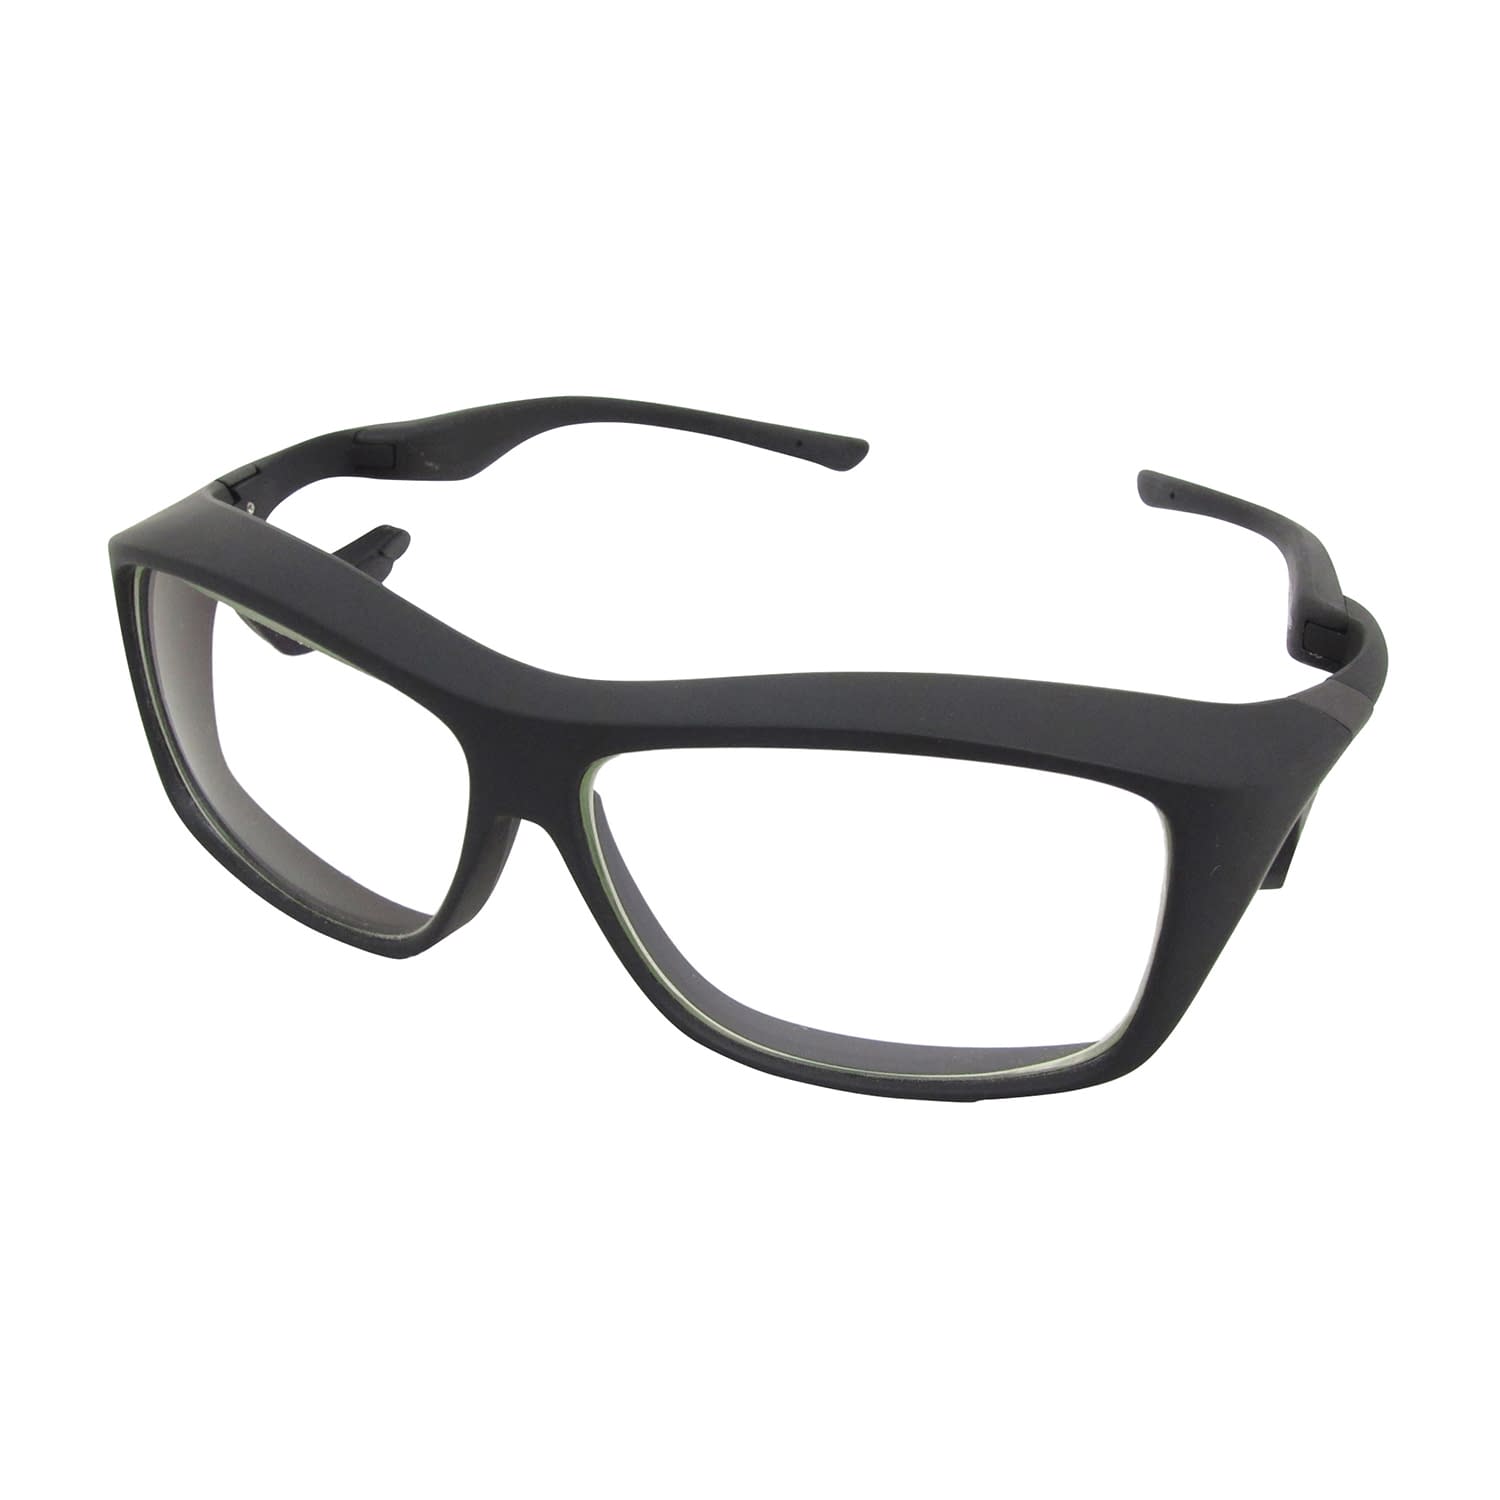 Dr．view 放射線防護用眼鏡AF DRV-X01 X線防護用眼鏡 25-3752-00【日本レンズ工業】(DRV-X01)(25-3752-00)